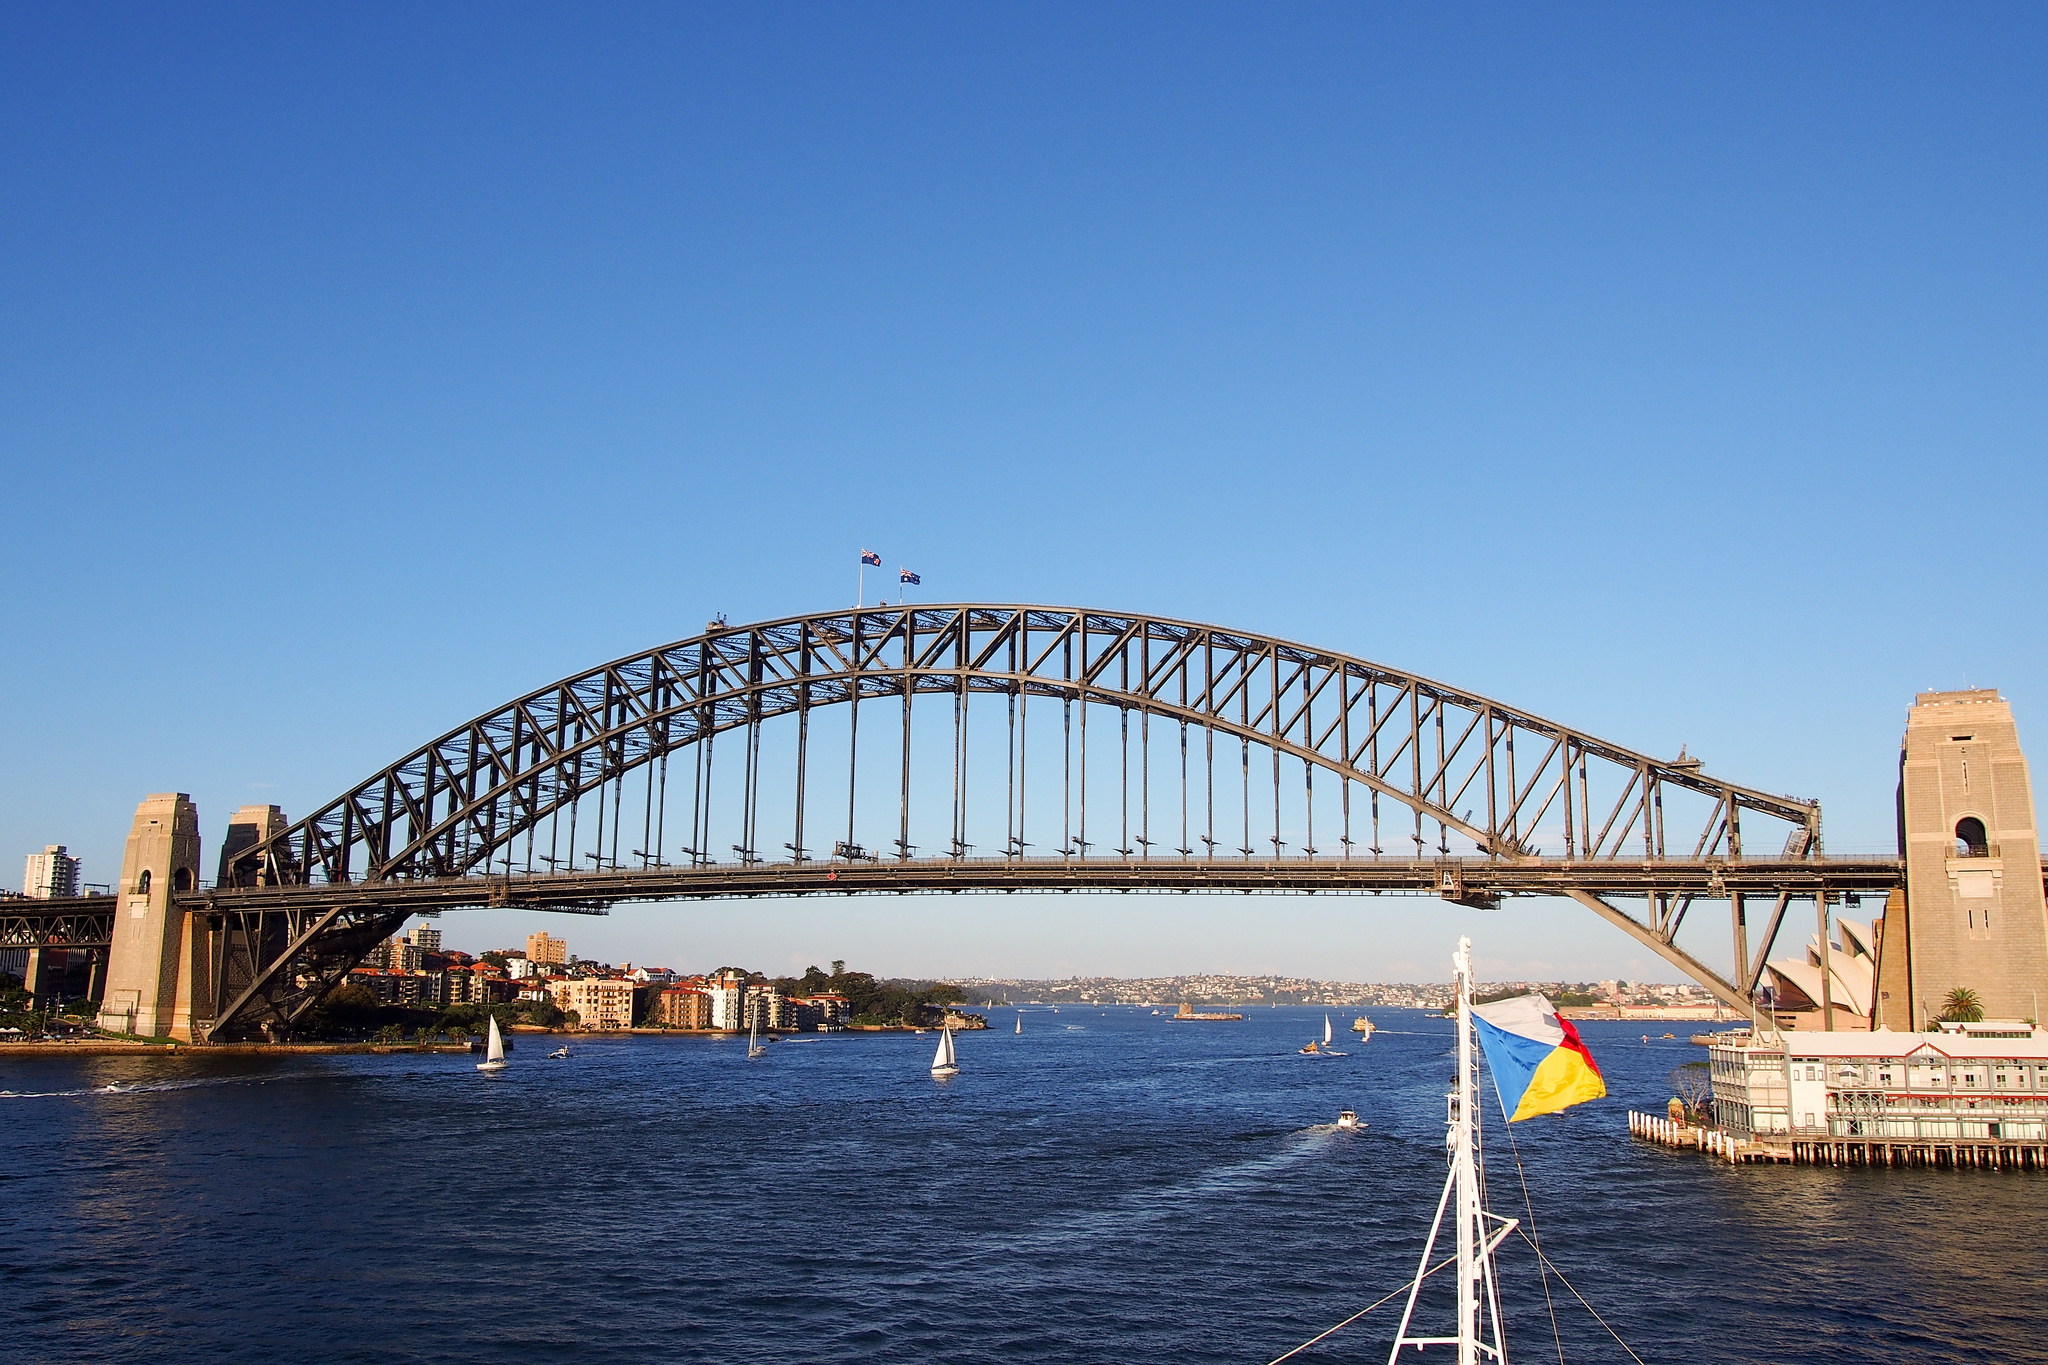 Harbour bridge. Мост Харбор-бридж в Сиднее. Мост Харбор бридж в Австралии. Харбор-бридж (Сидней, Австралия). Австралия мост Харбор бридж (г. Сидней).